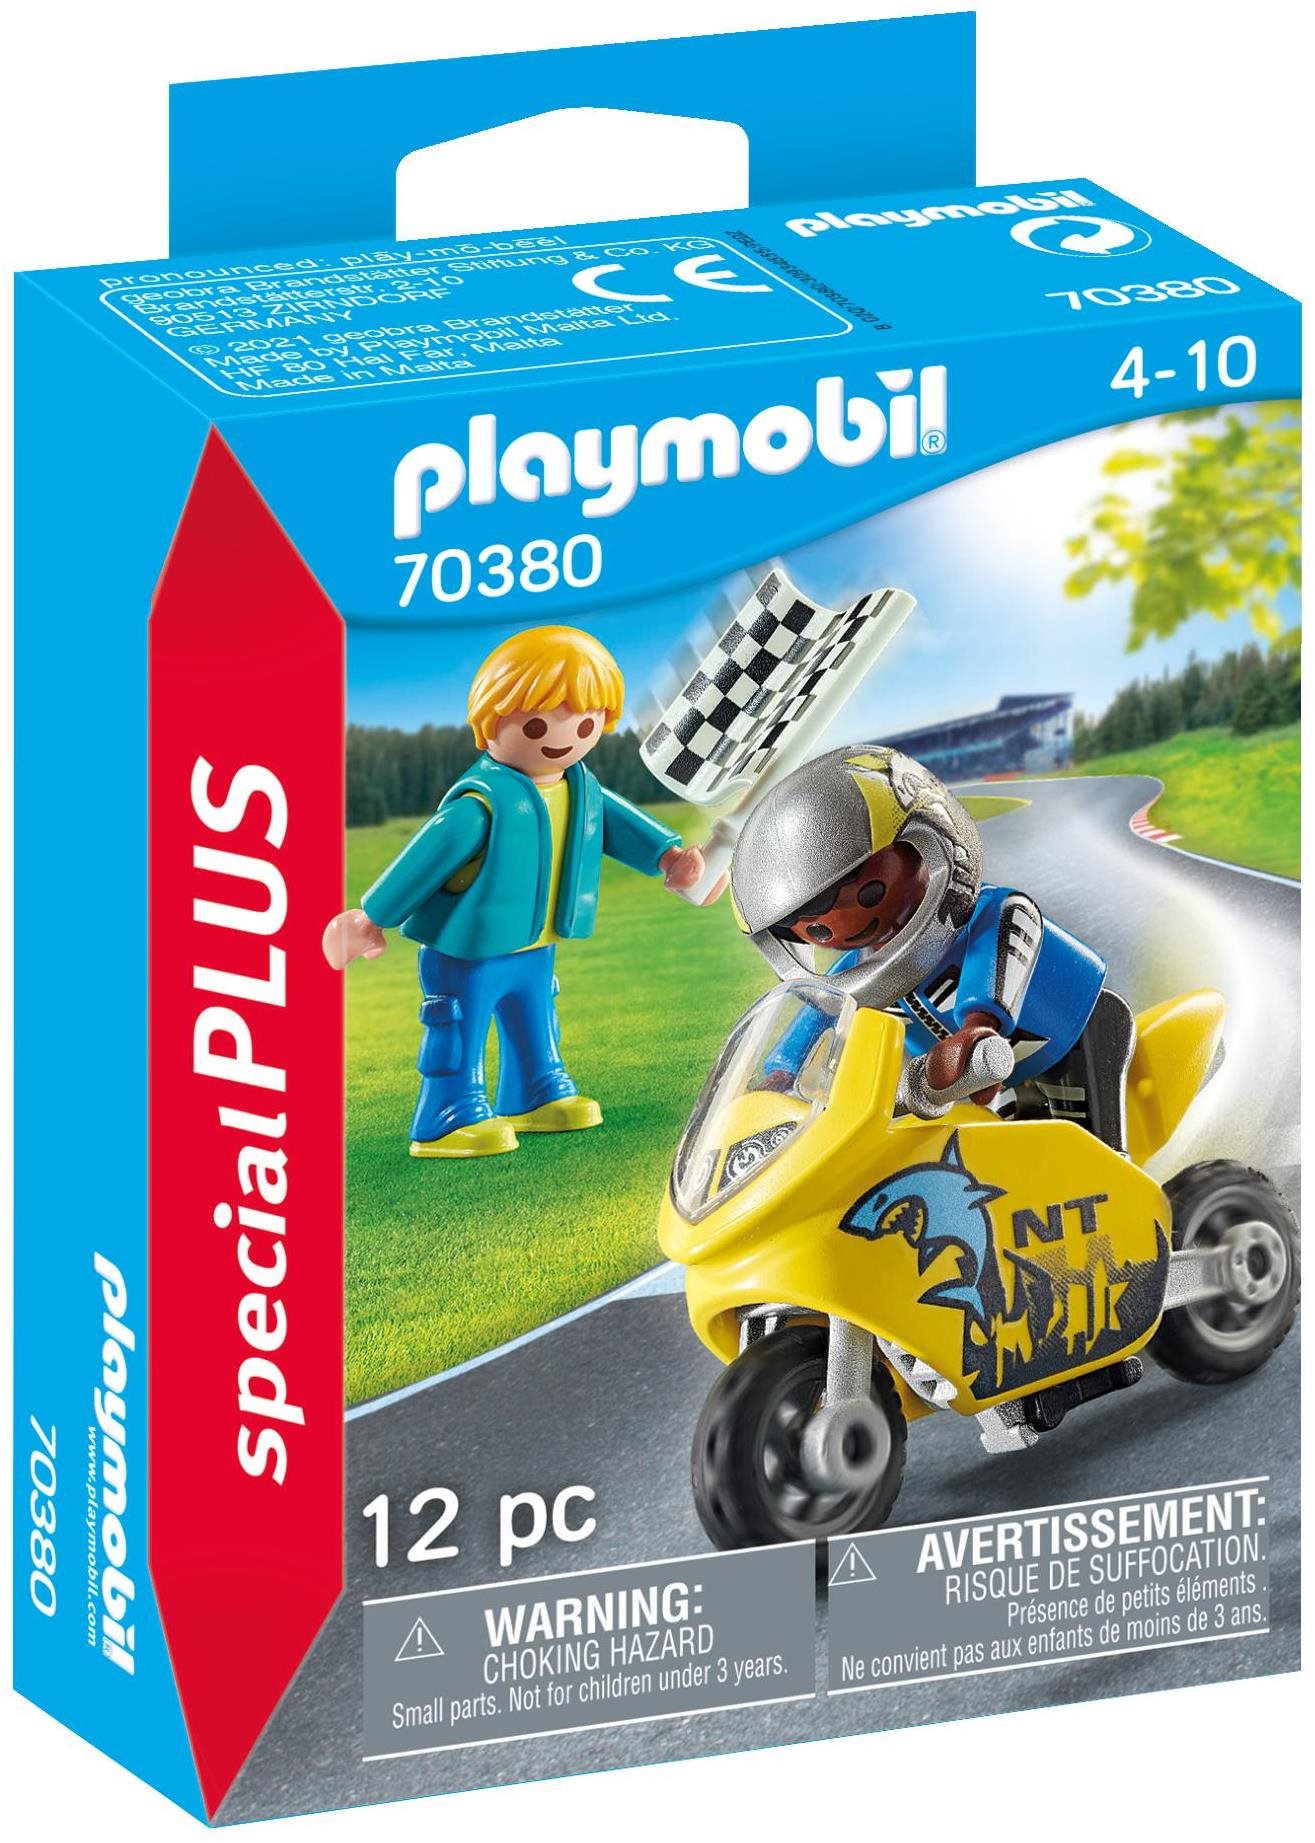 Playmobil 70380 Fiúk versenybiciklivel